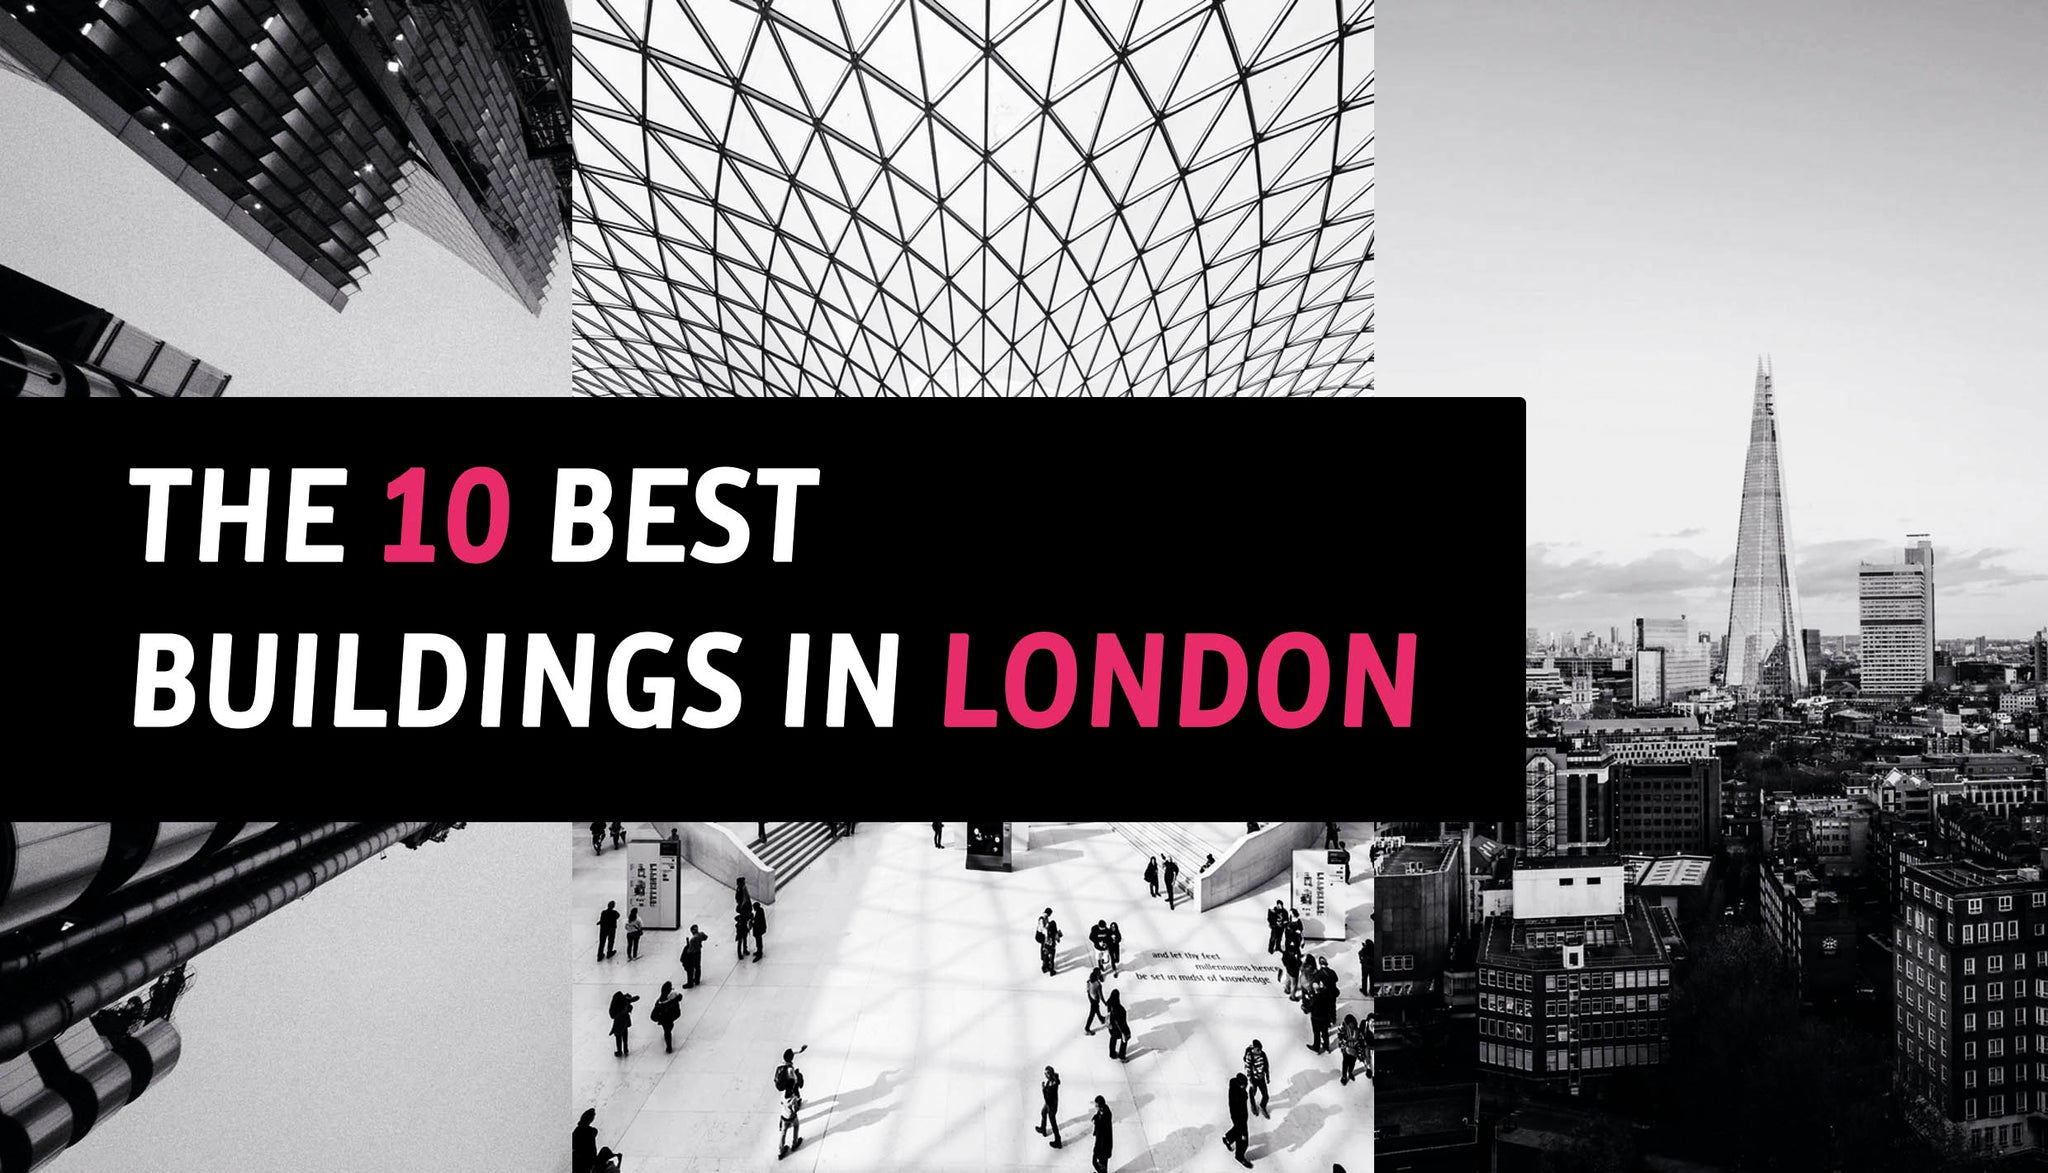 The 10 Best Buildings in London